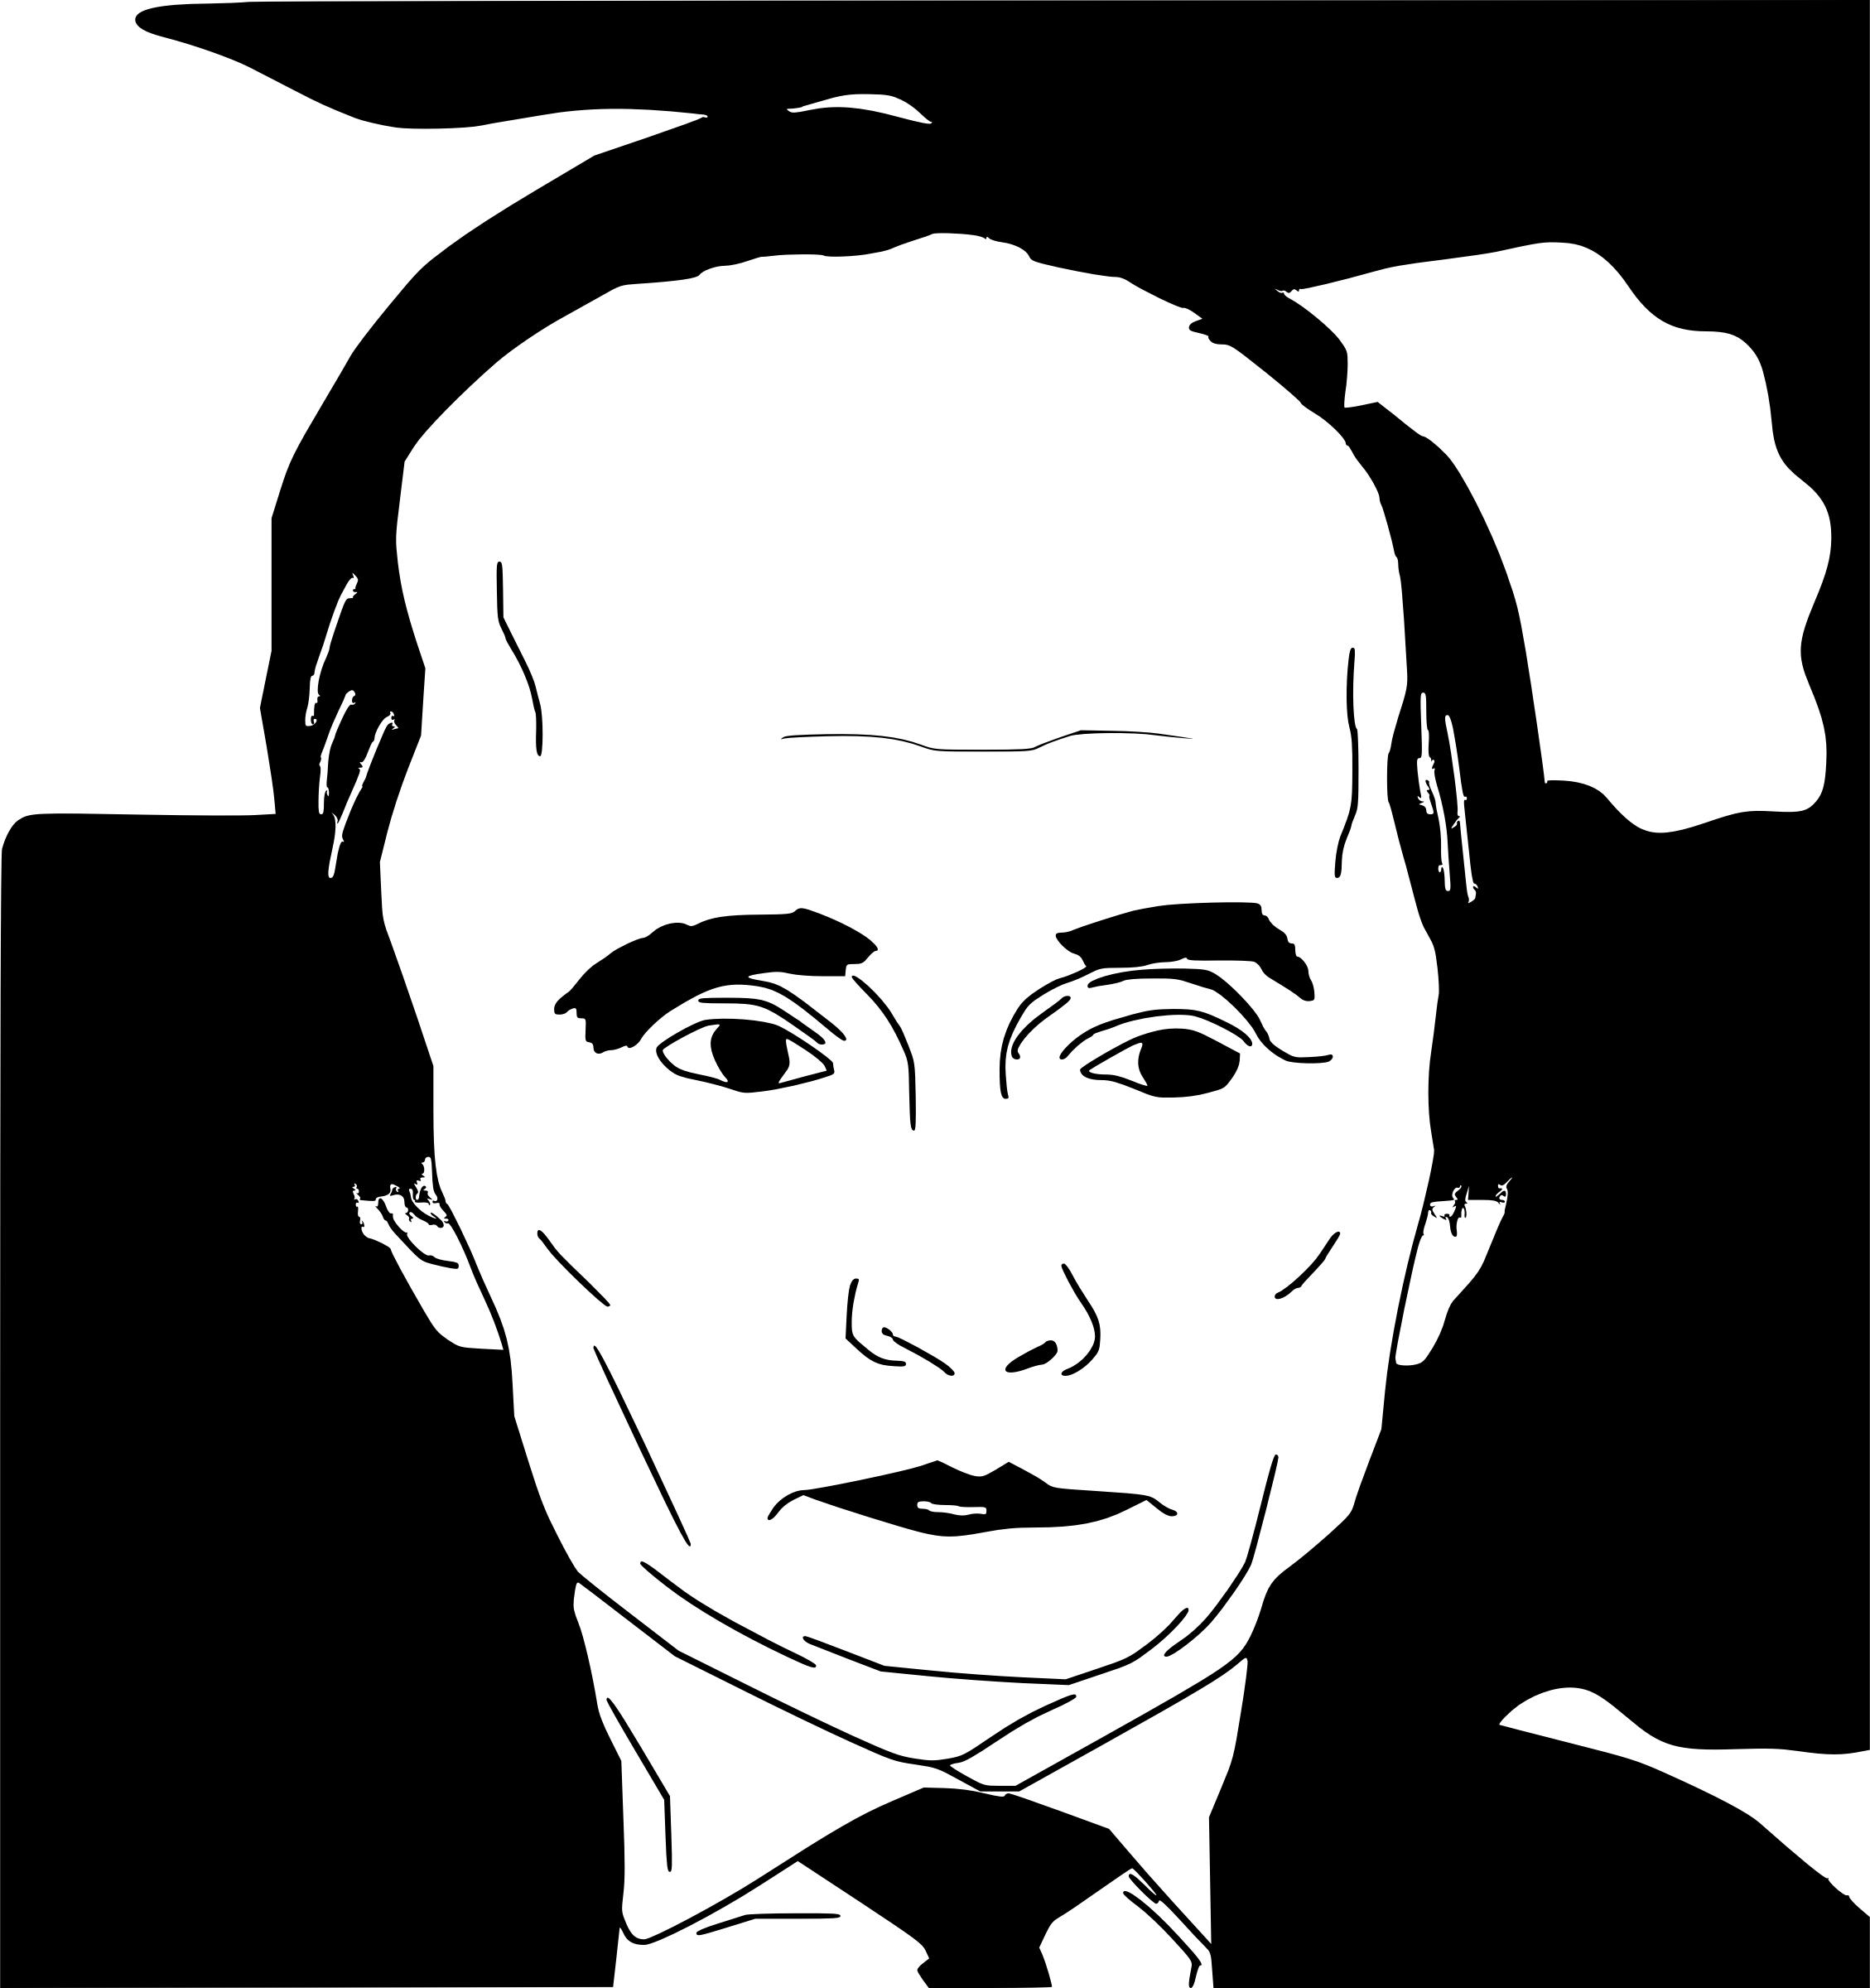 Vladimir Putin Caricature png